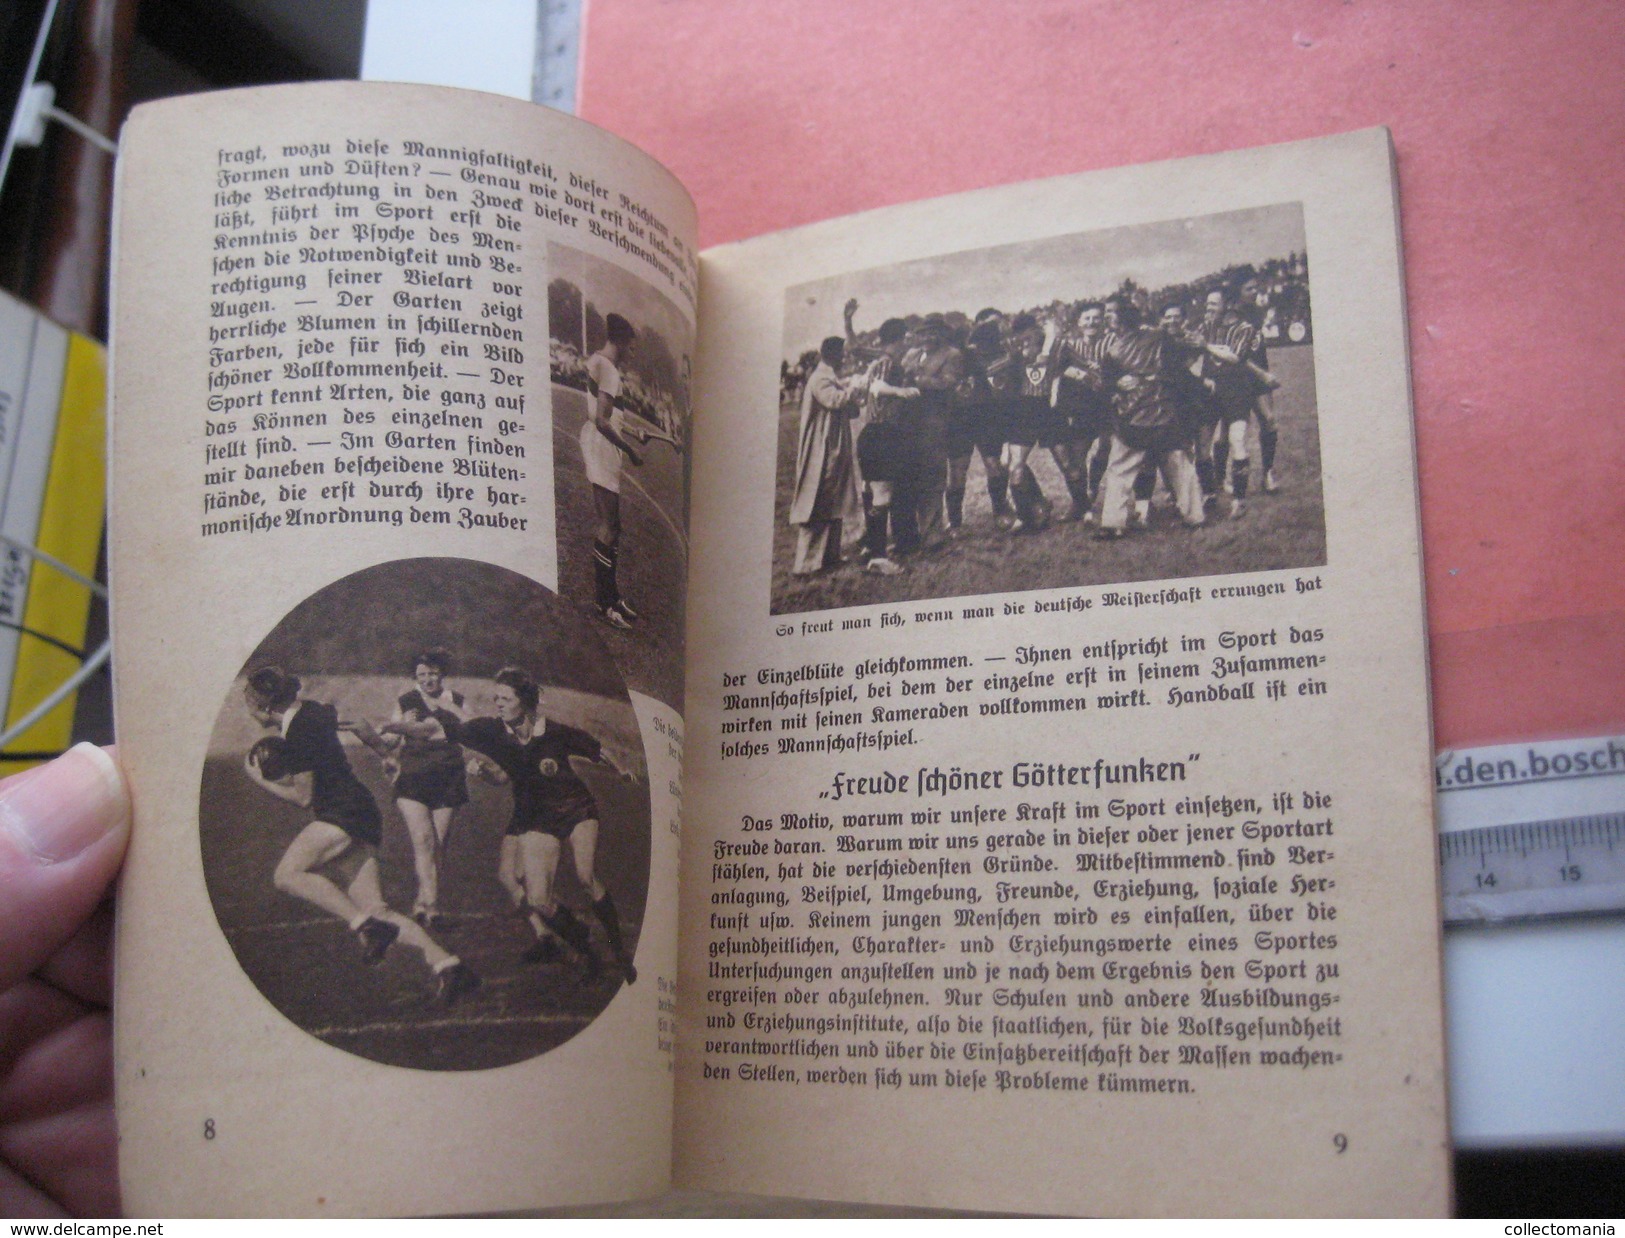 Handball Olympia BERLIN 1936 - nr 6, programm,women and men   fotos Amt FUR Sportwerbung Olympische